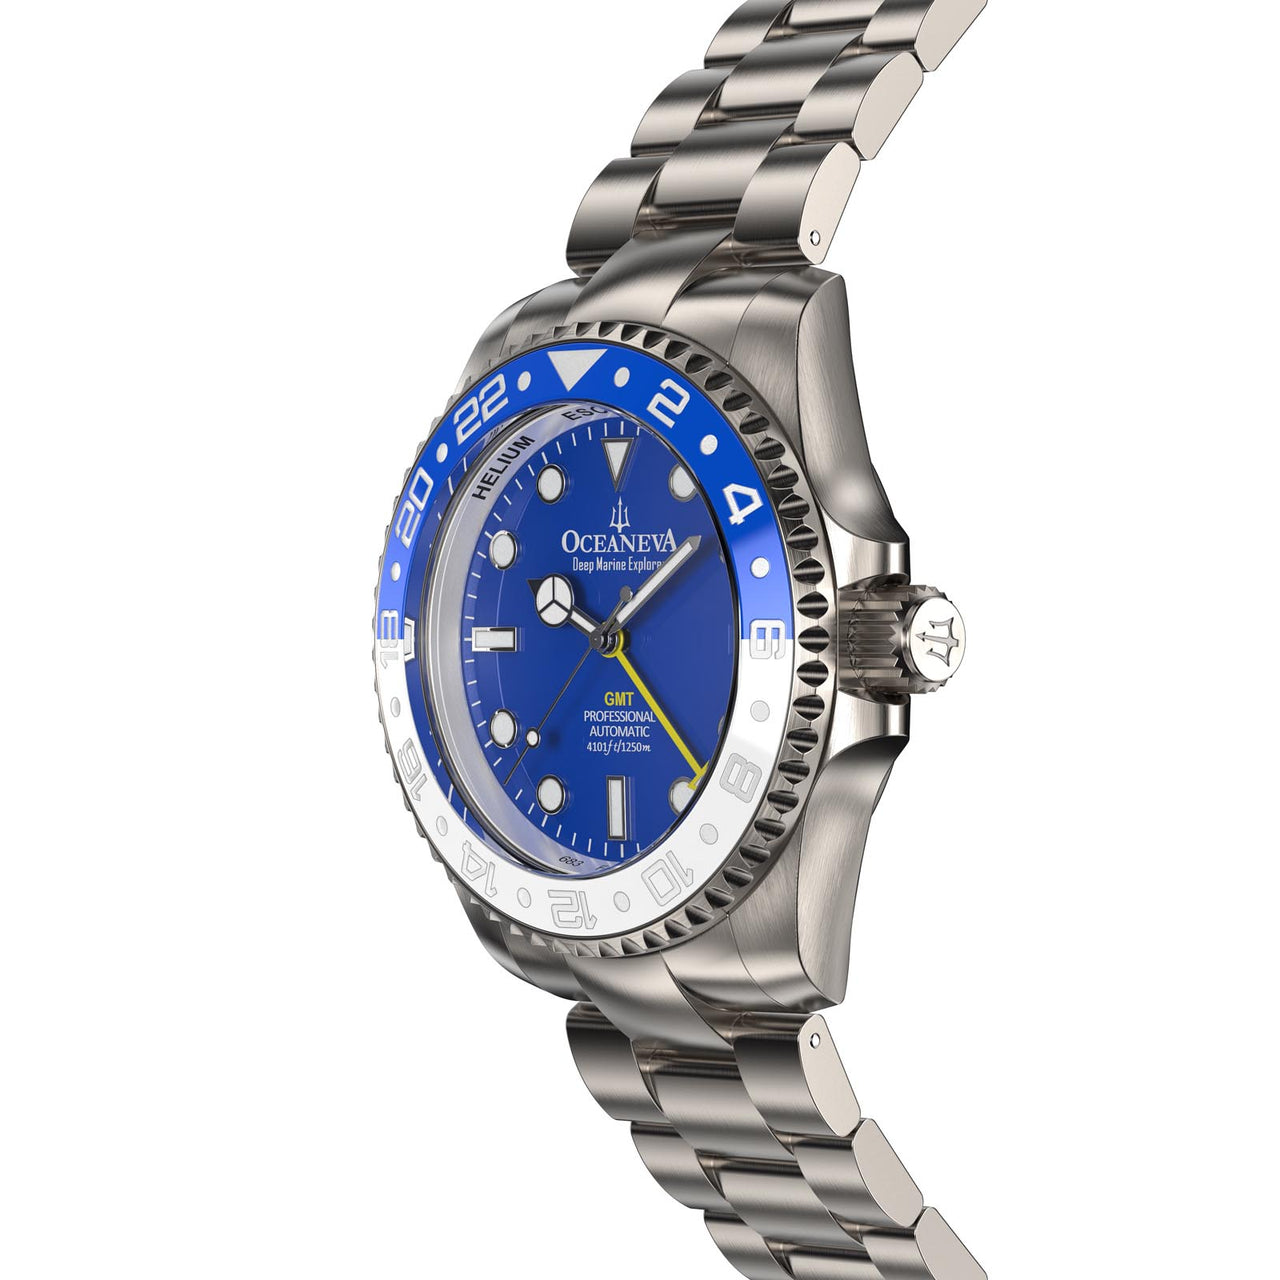 Durable titanium alloy construction of Oceaneva Deep Marine Explorer Watch